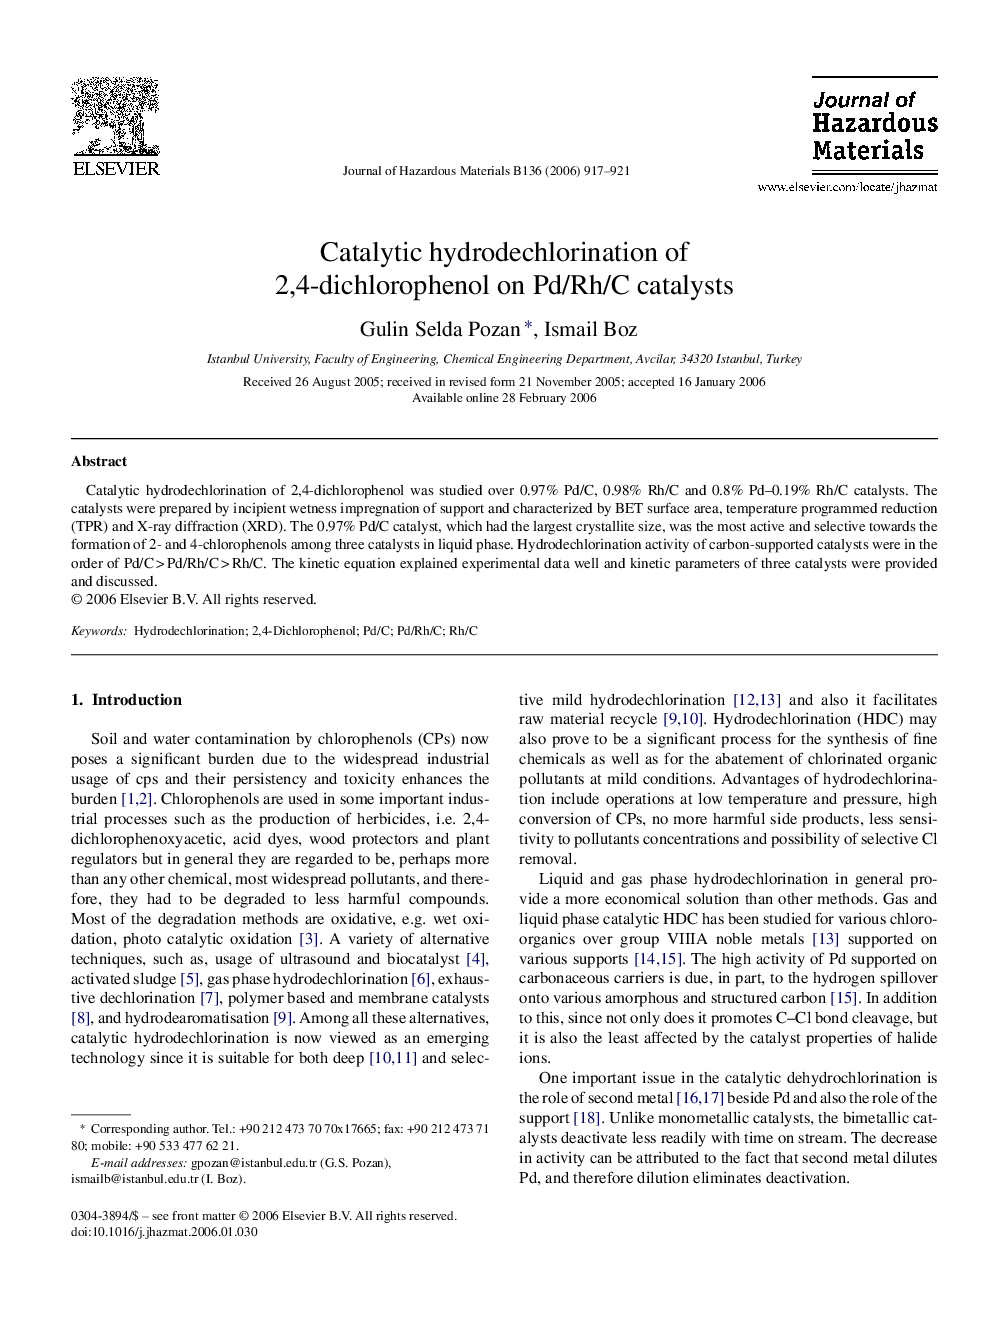 Catalytic hydrodechlorination of 2,4-dichlorophenol on Pd/Rh/C catalysts